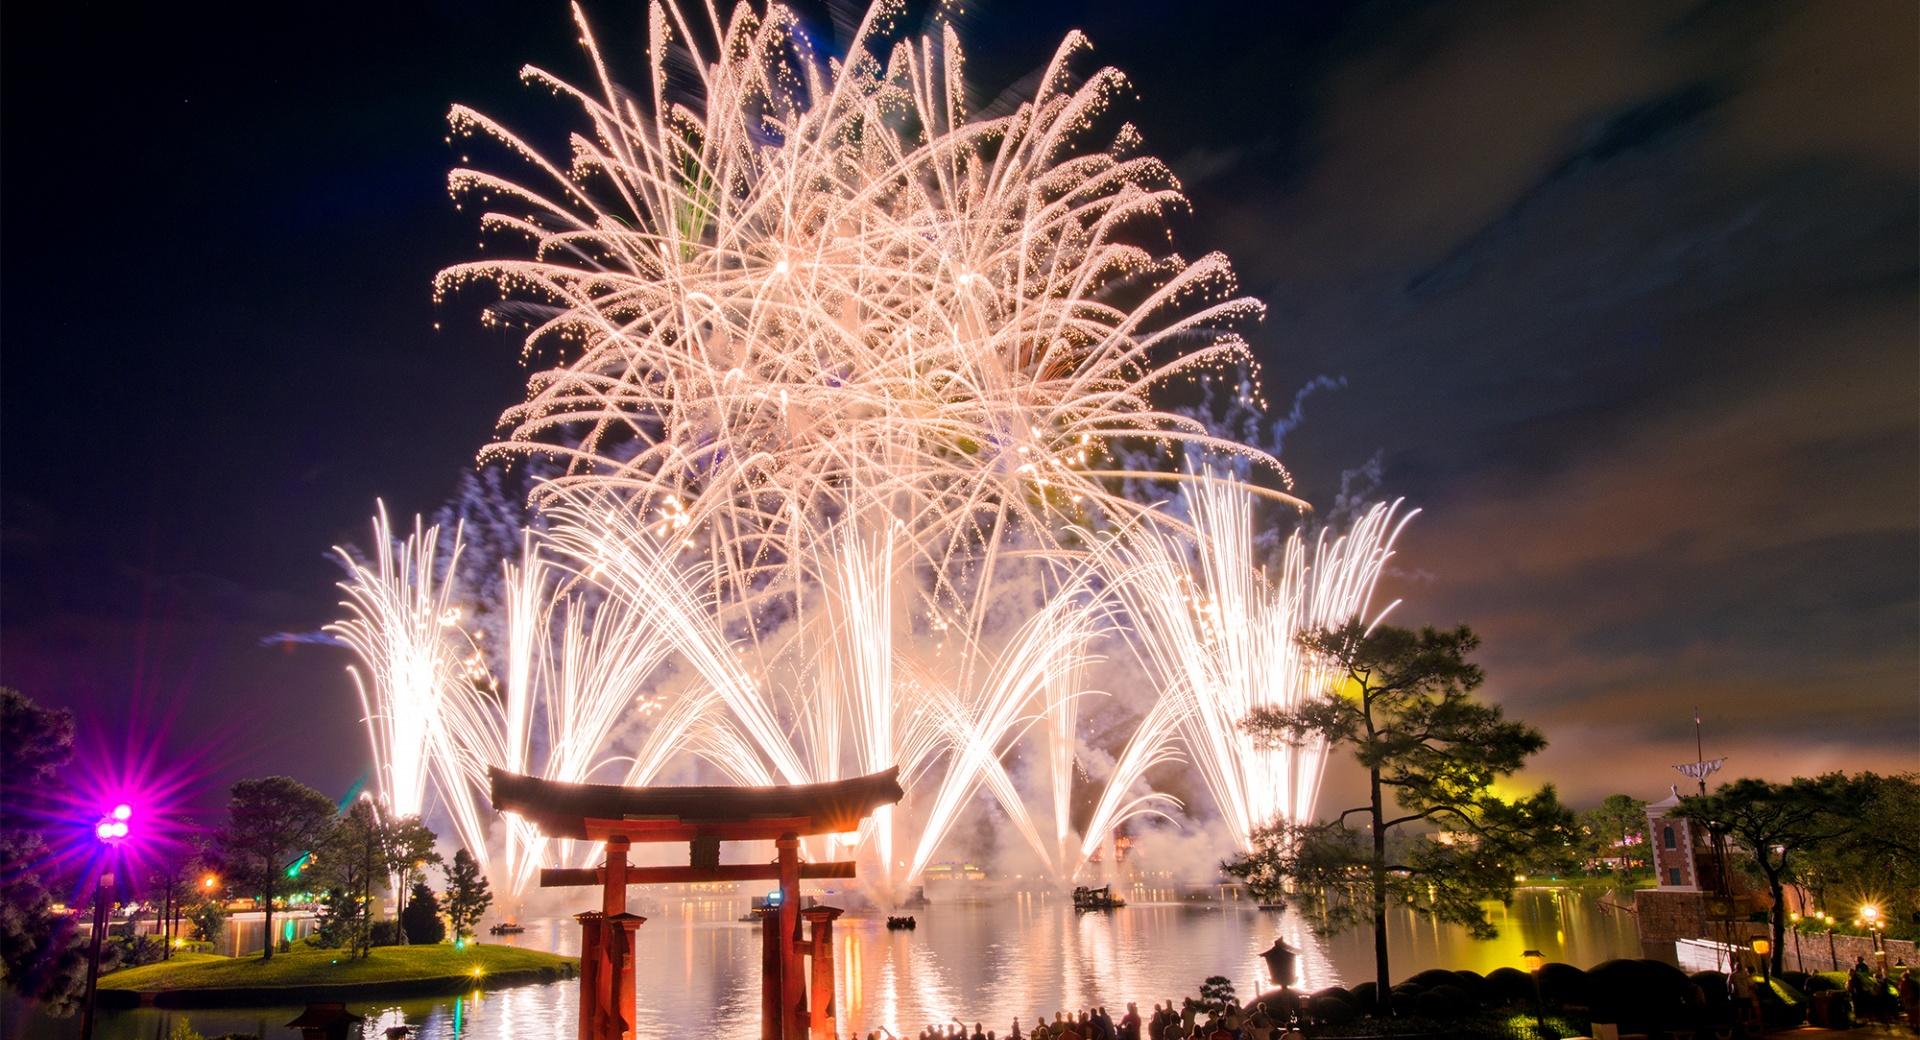 Walt Disney World Fireworks at 1024 x 768 size wallpapers HD quality